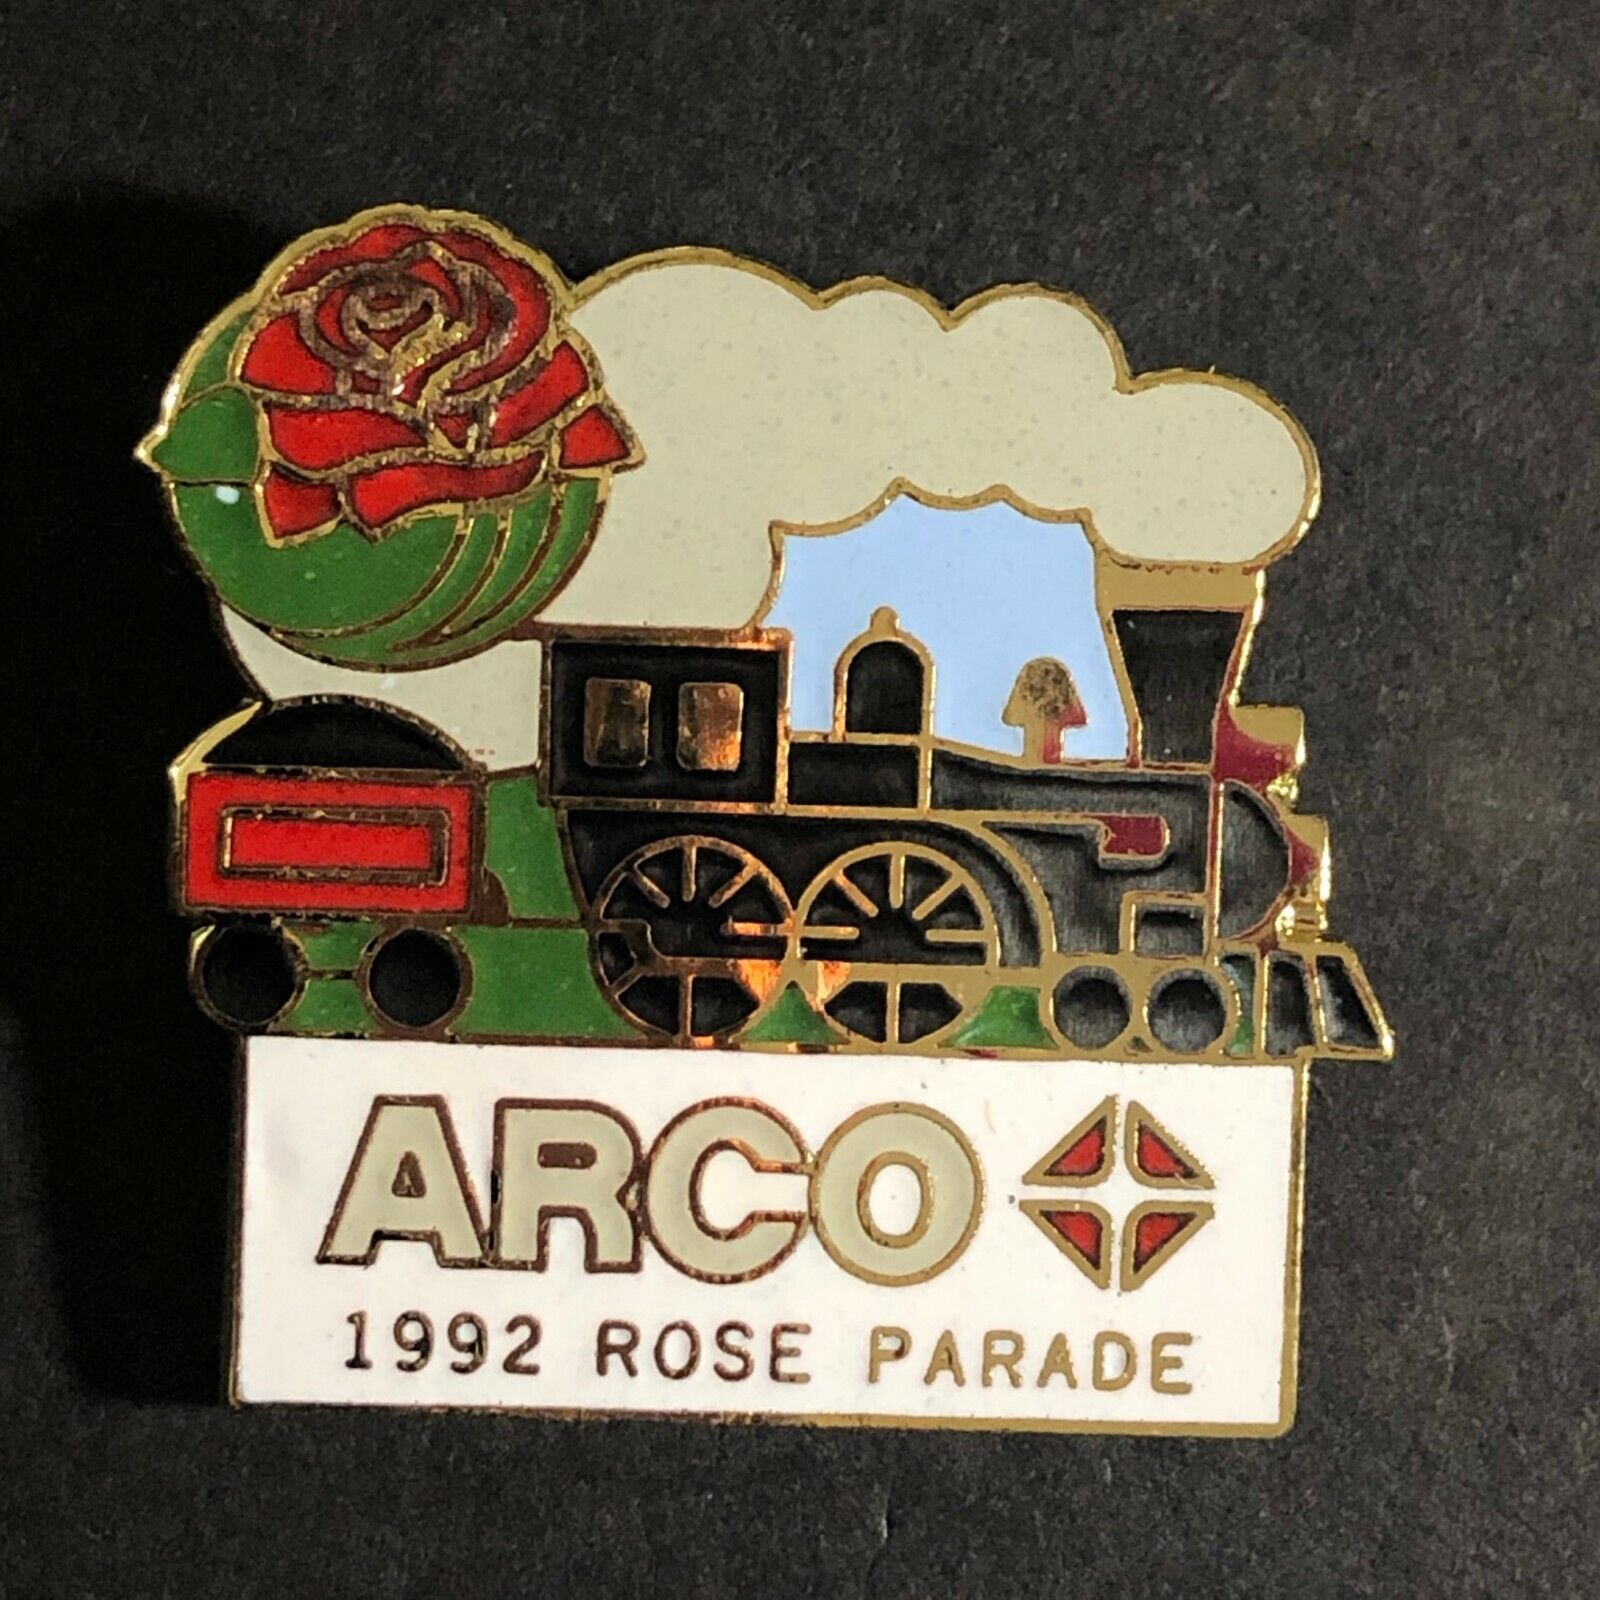 1992 ARCO Enameled lapel / Hat Pin - Rose Parade - Coal Locomotive